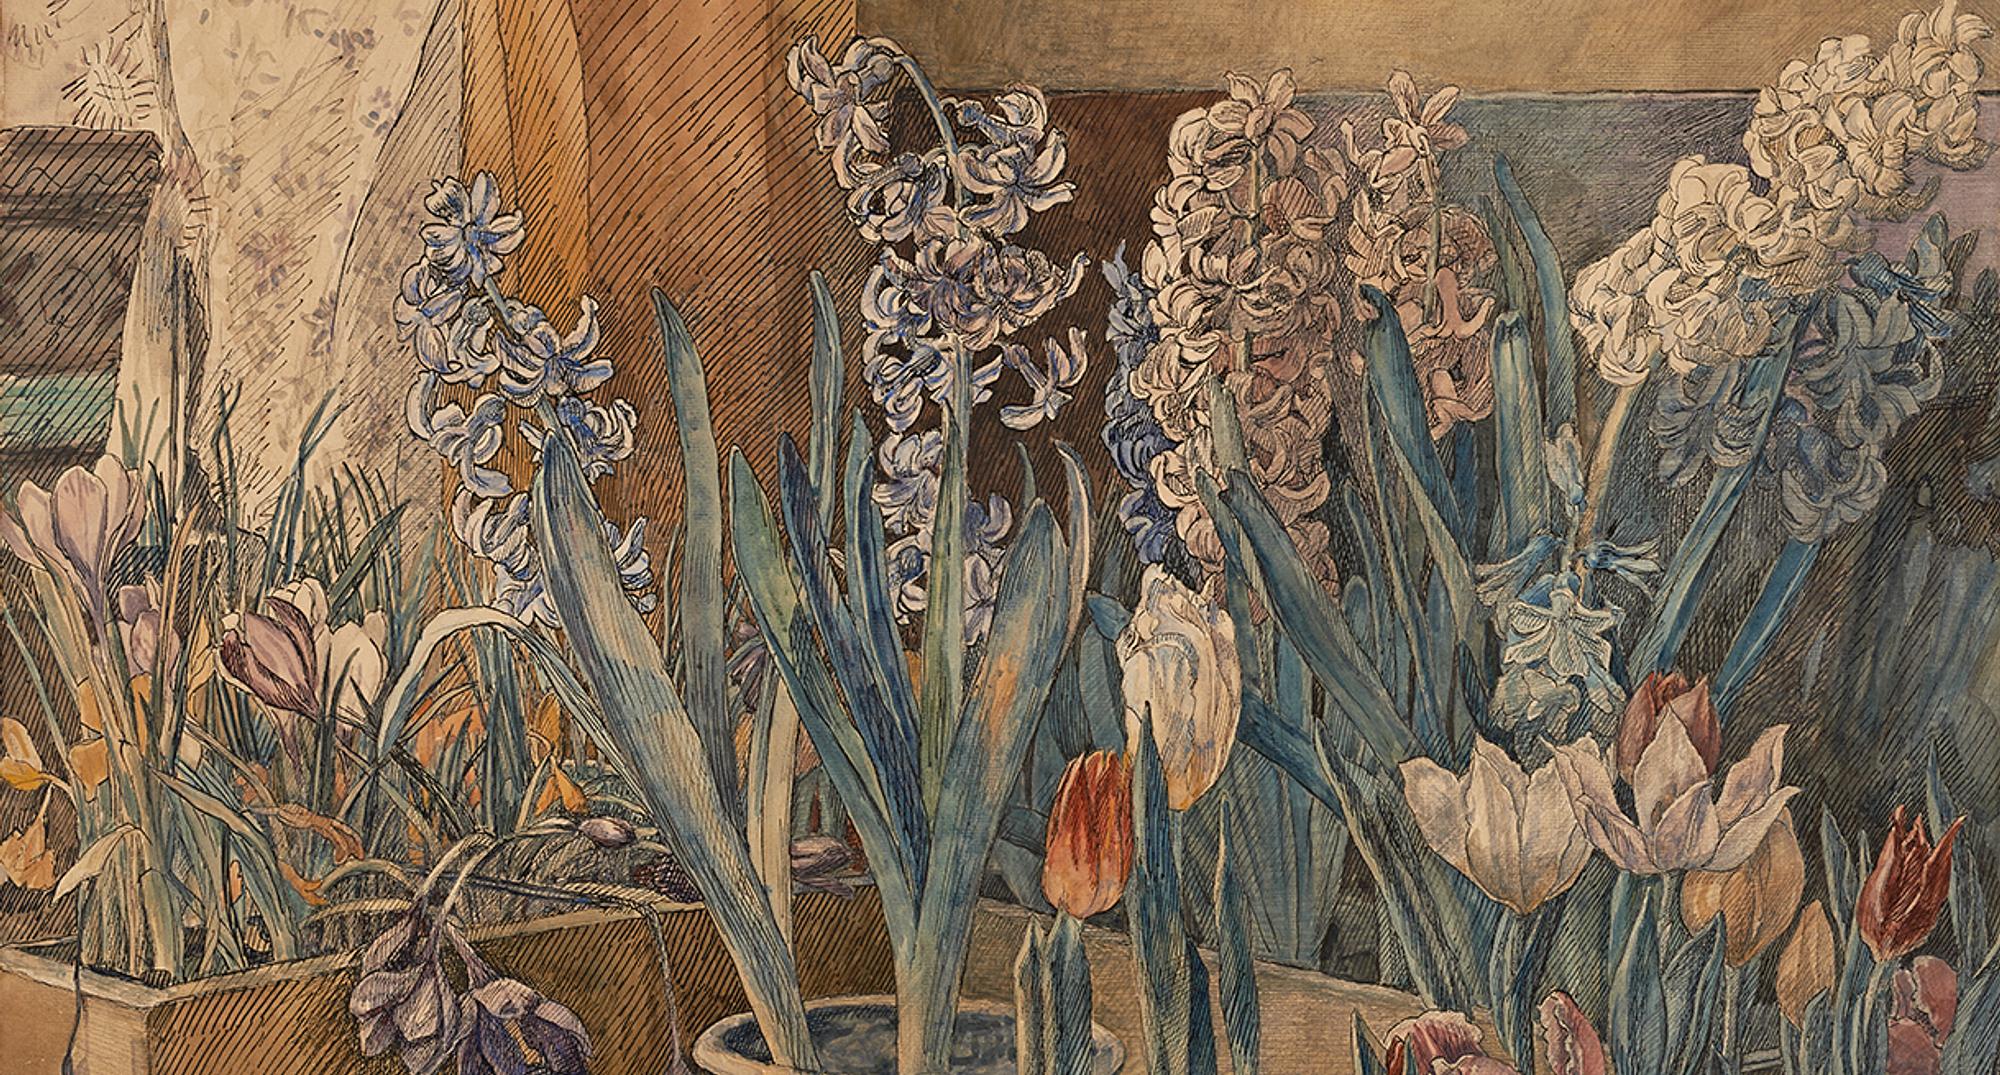 Anna-Syberg-akvarel-blomster